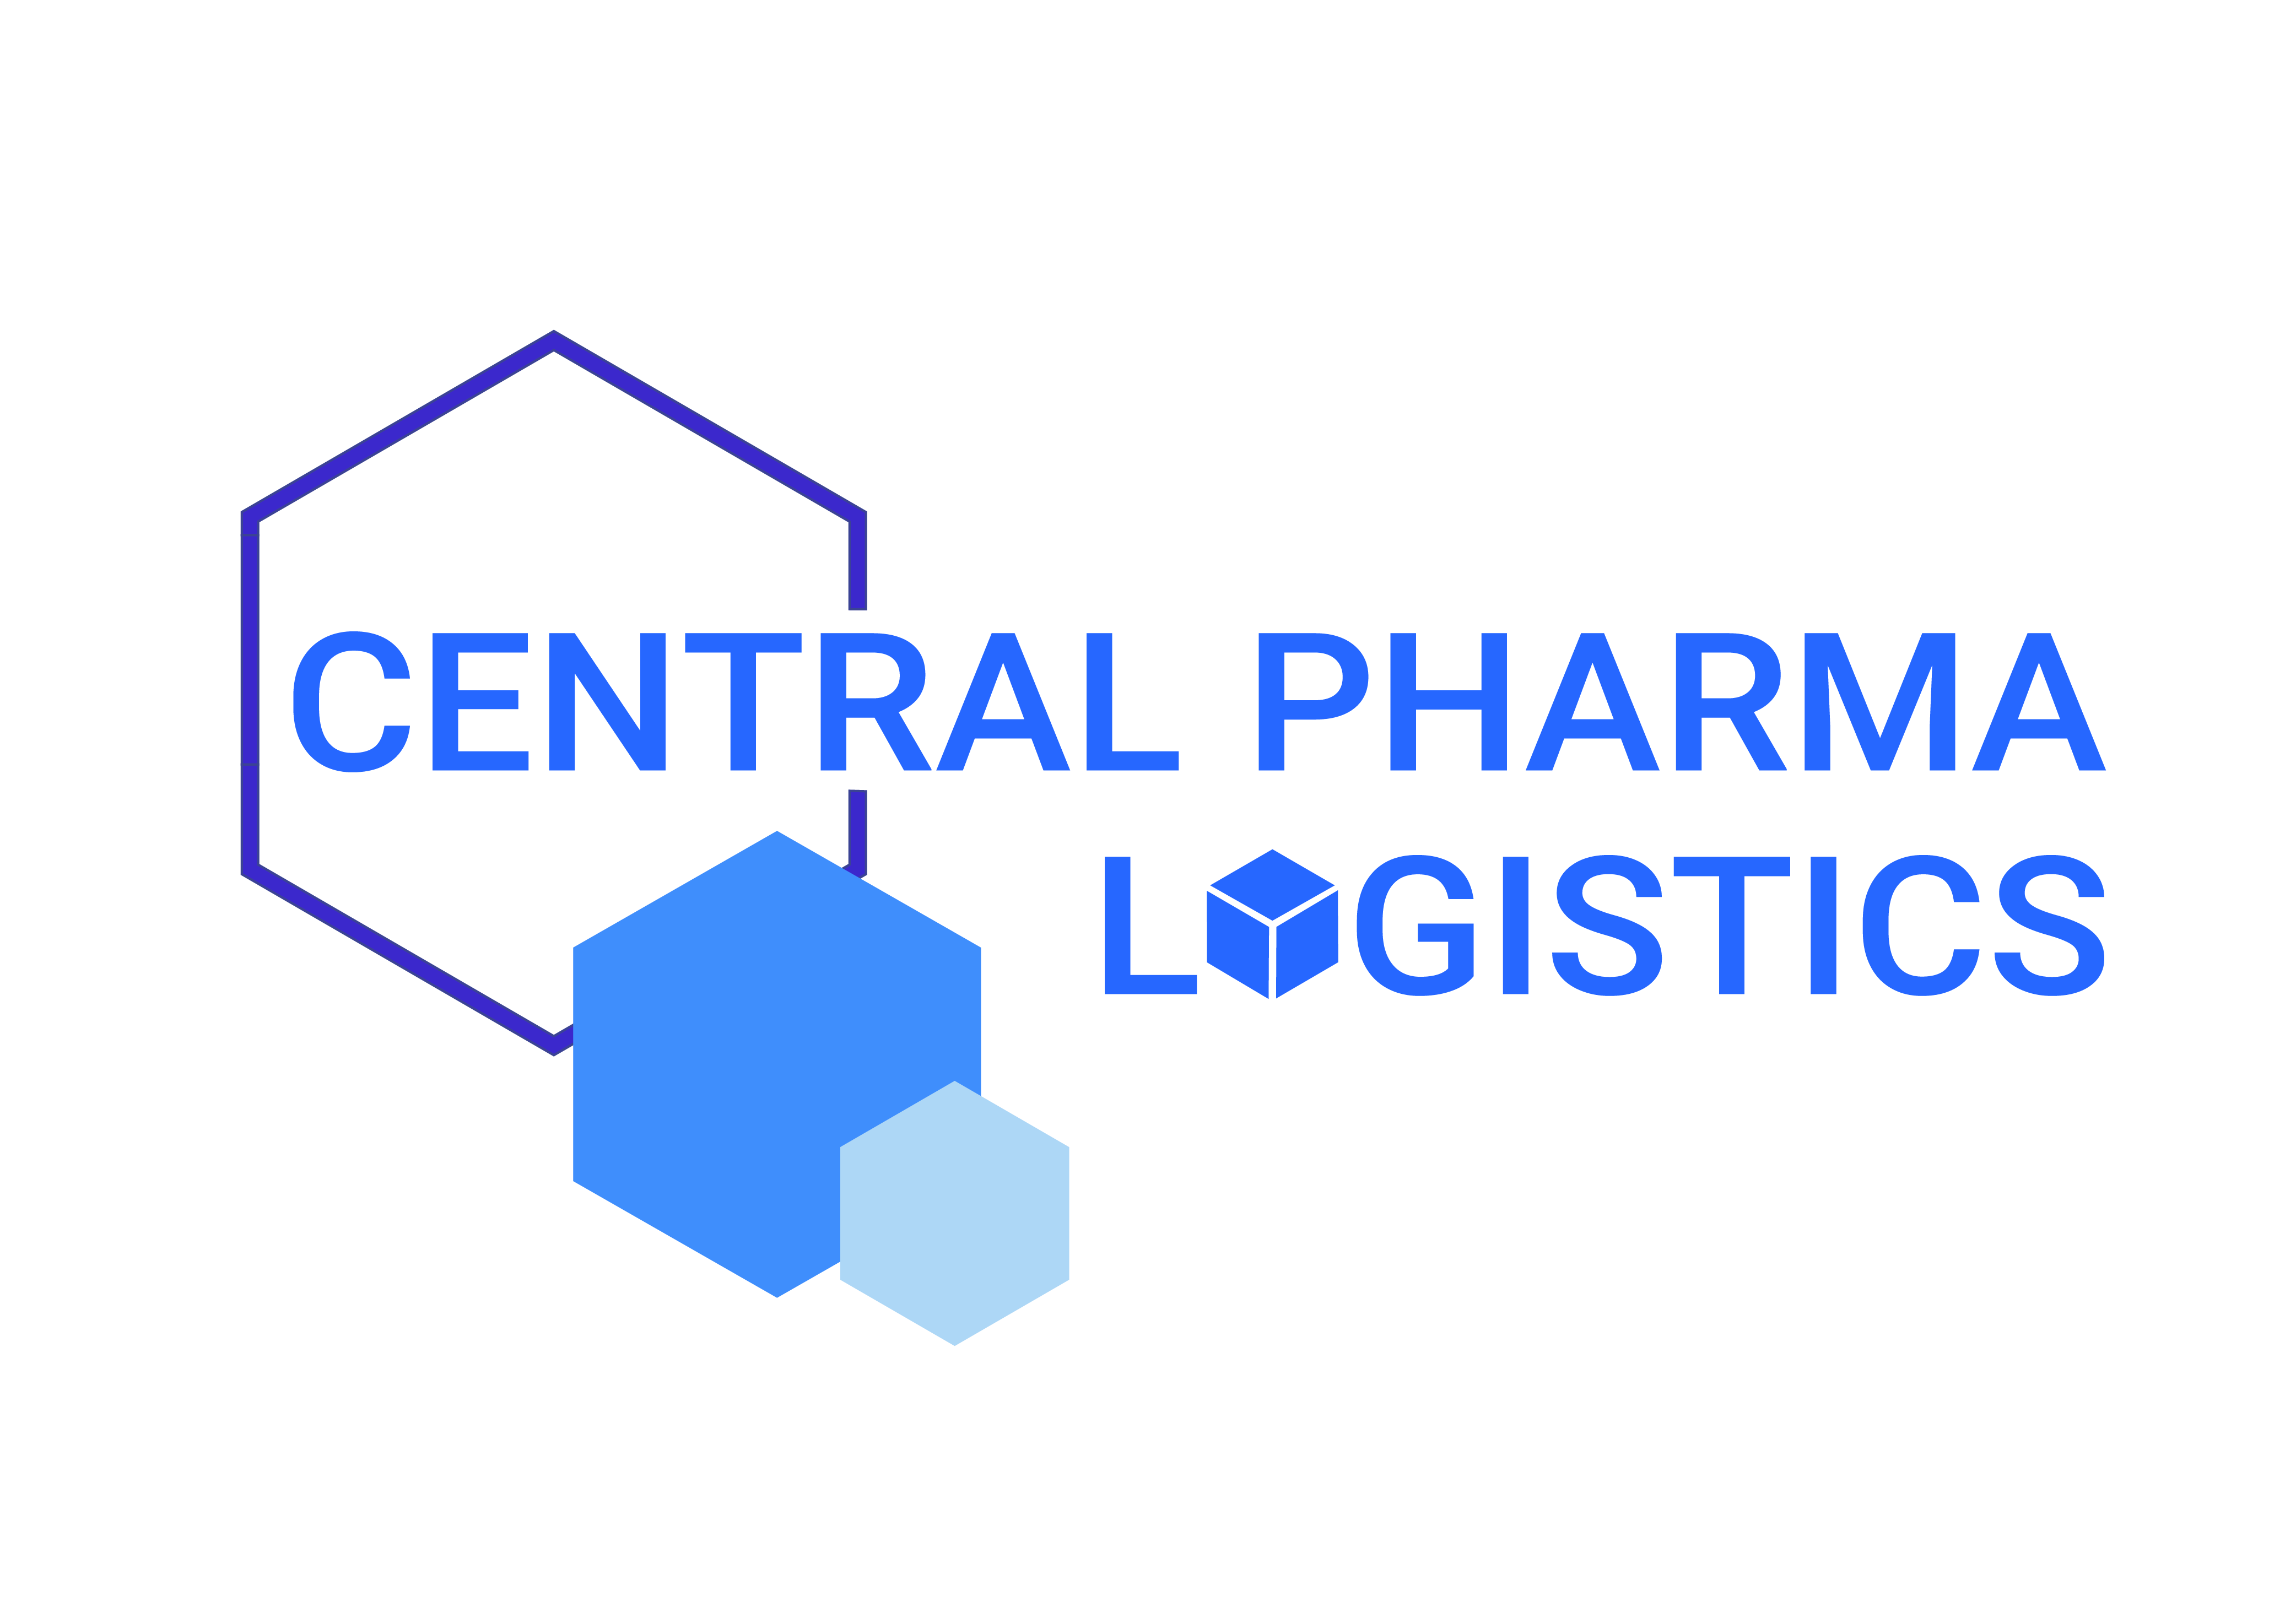 Central Pharma Logistics